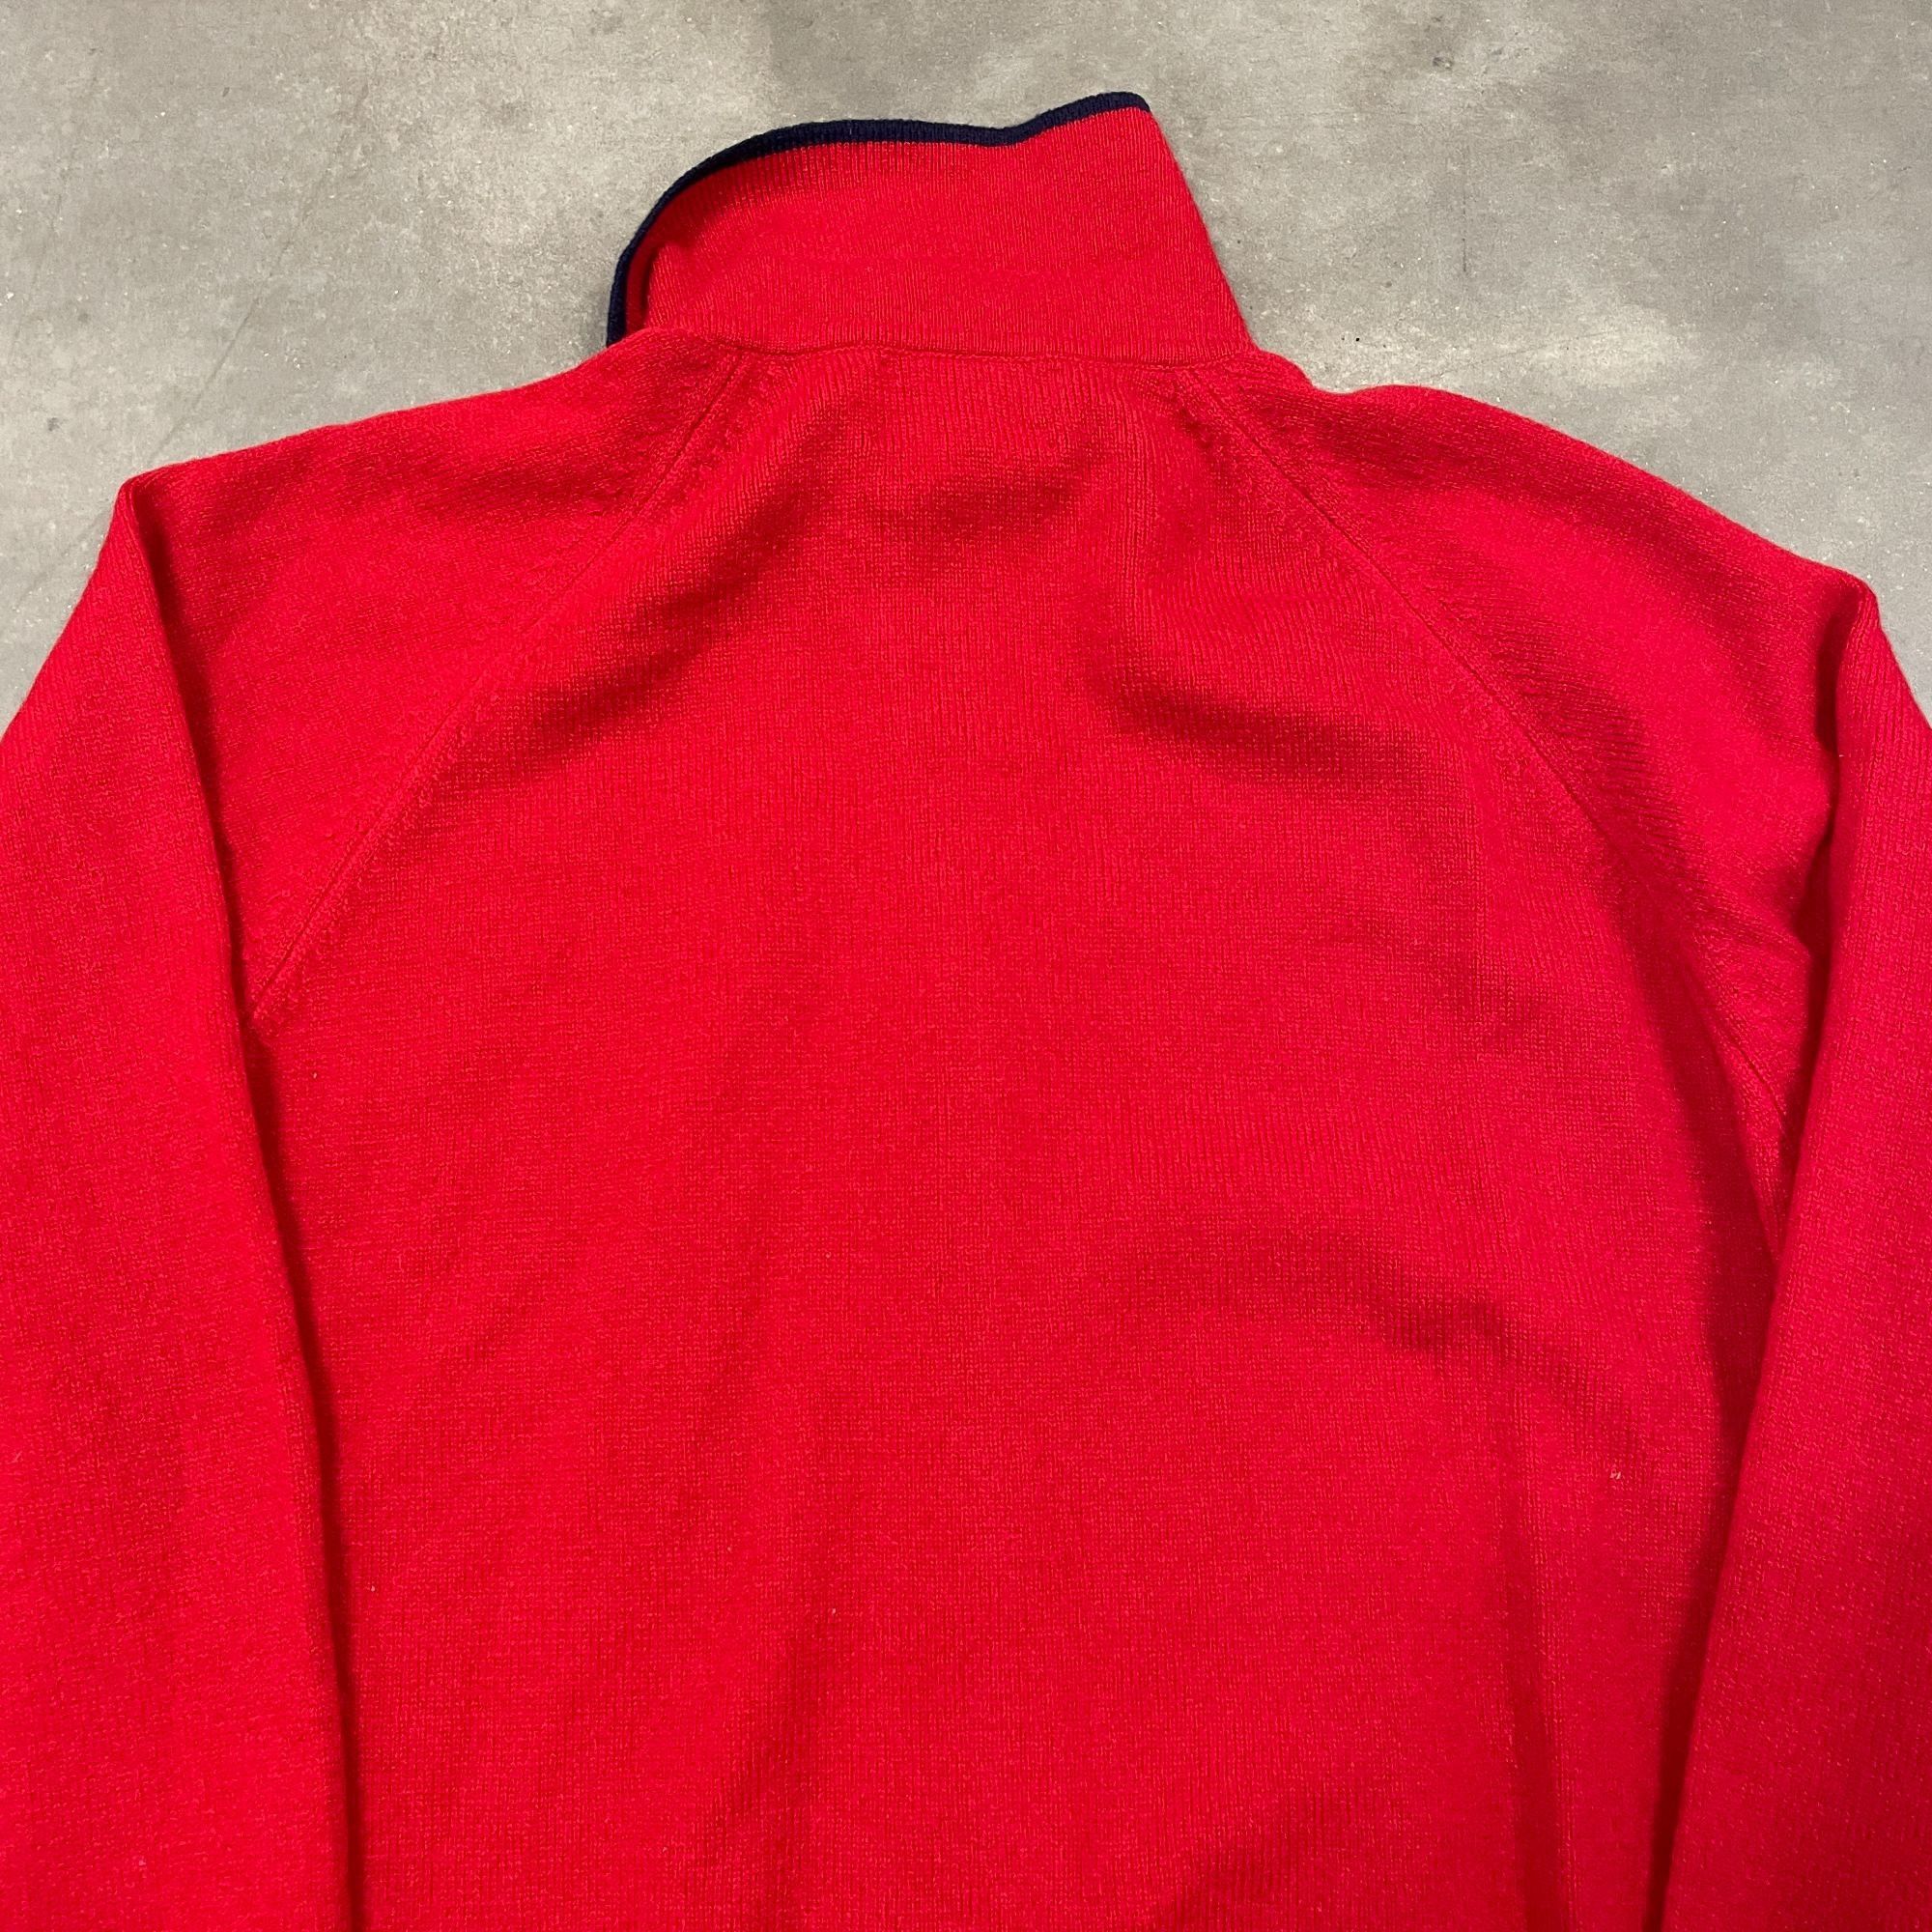 Vintage 60s VTG Red Wool Puritan Aquaknit Wool Zip Up Sweater XL Red Size US XL / EU 56 / 4 - 9 Thumbnail